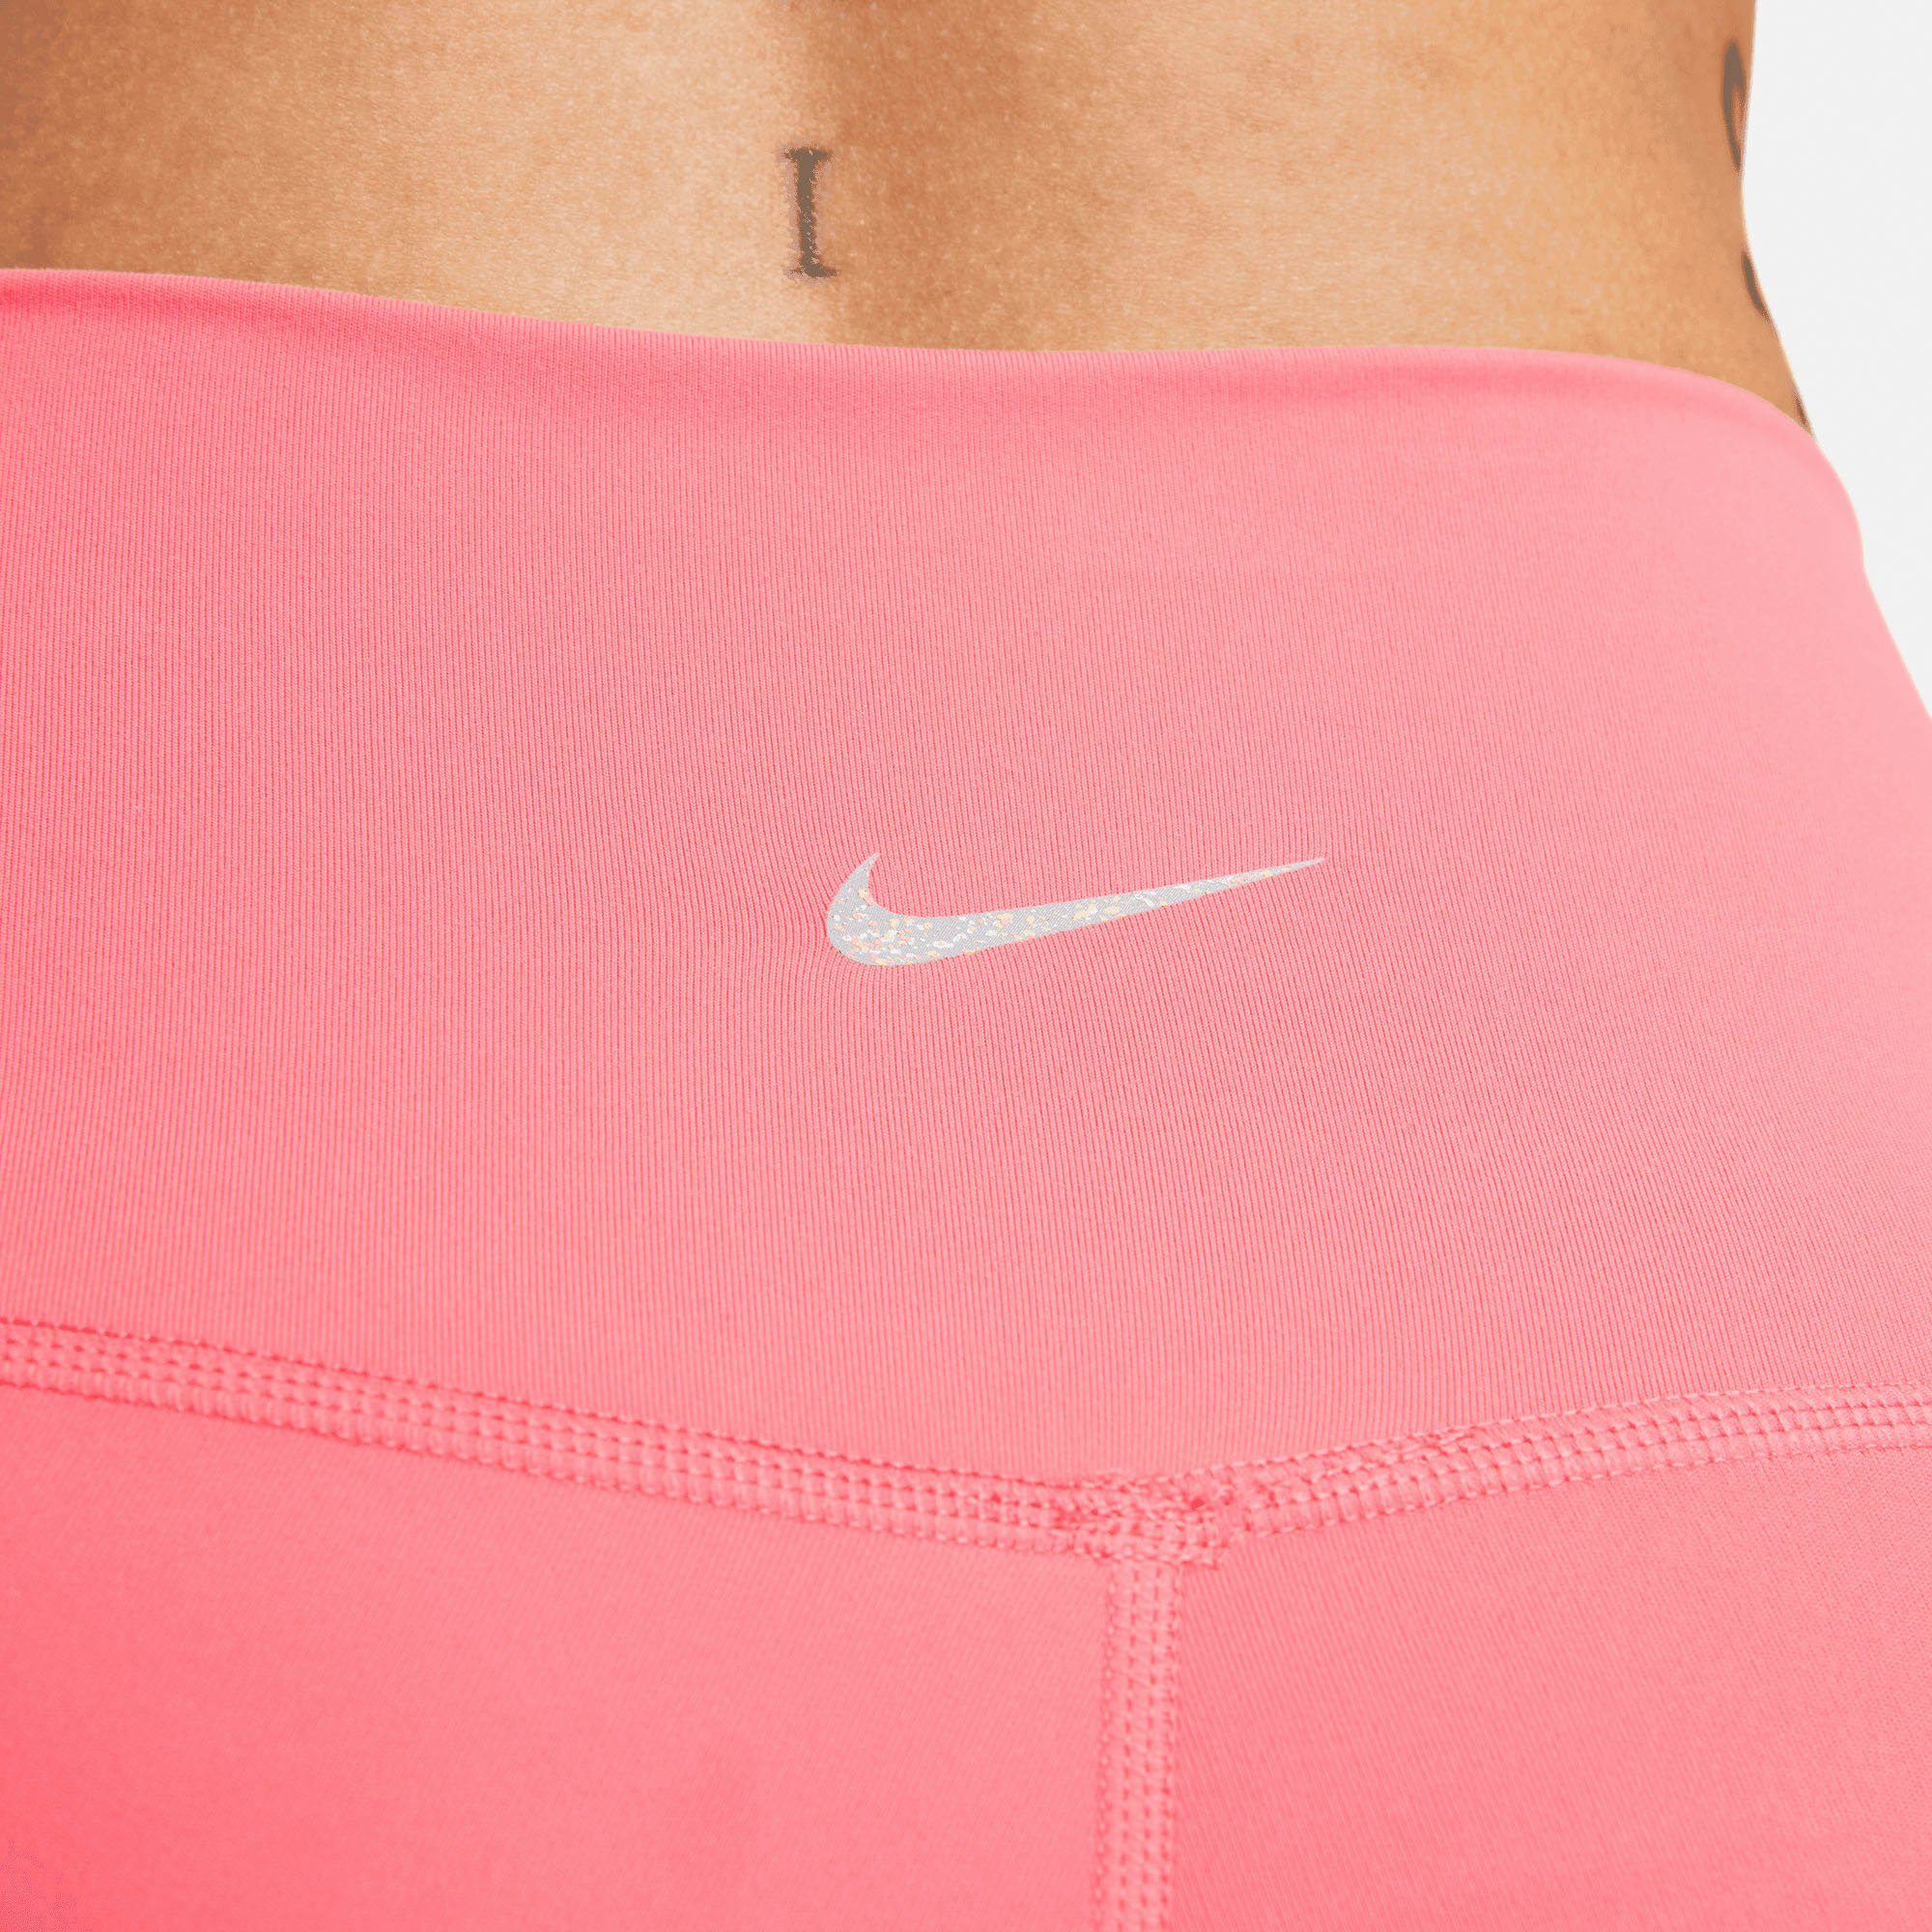 Nike Trainingstights / Women's High-Waisted Dri-FIT Leggings Yoga orange